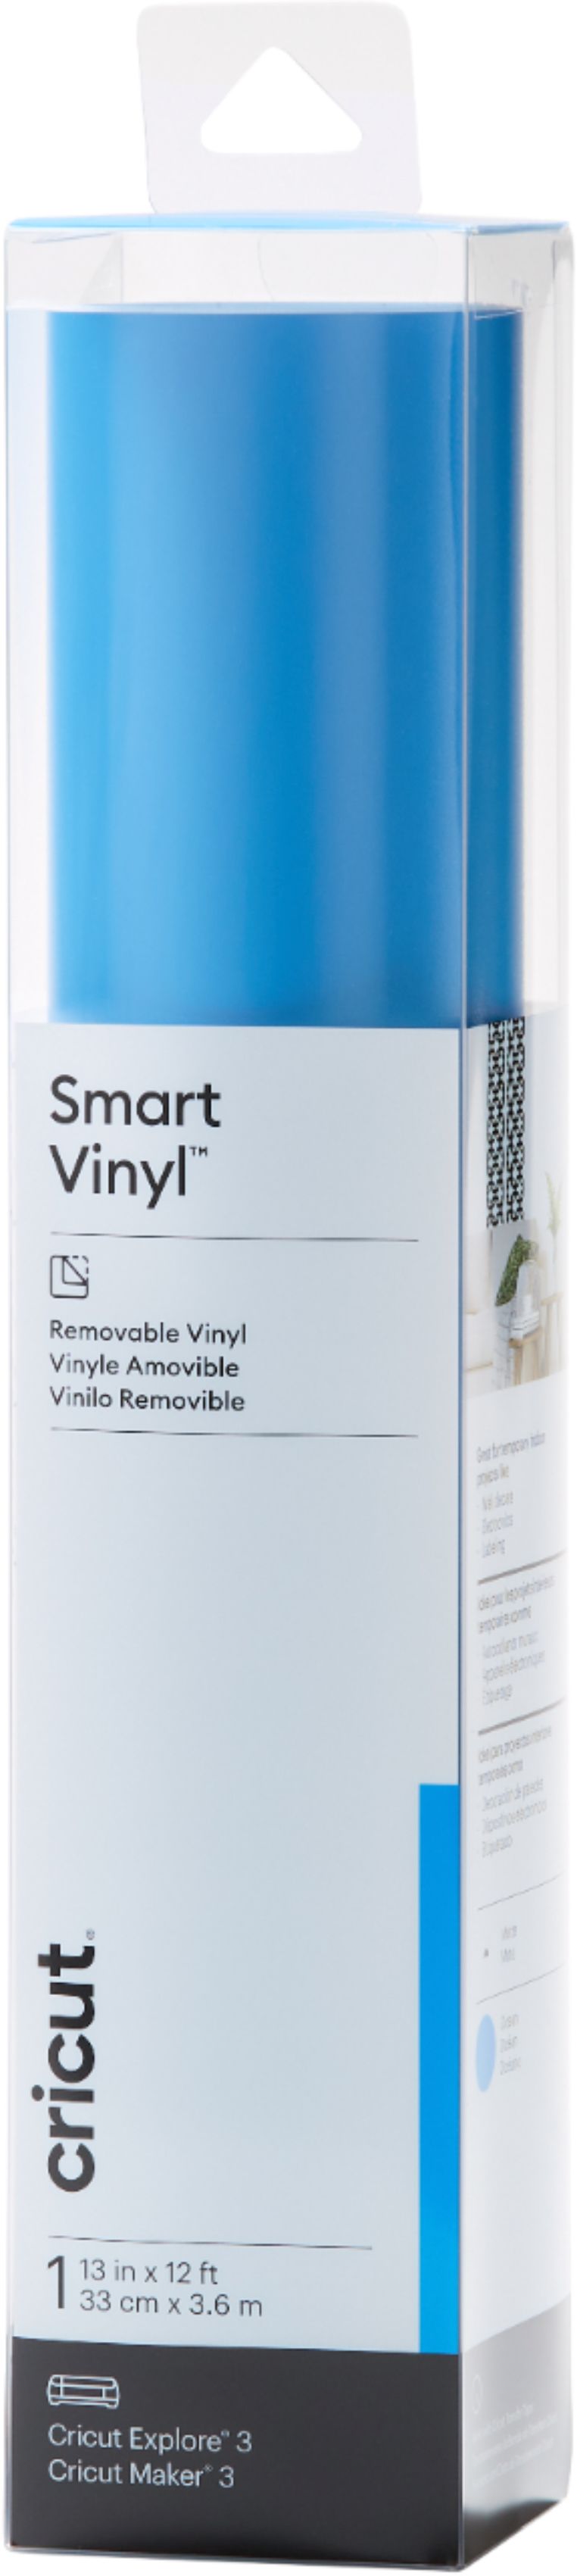 Cricut - Smart Vinyl – Removable 12 ft - Ocean